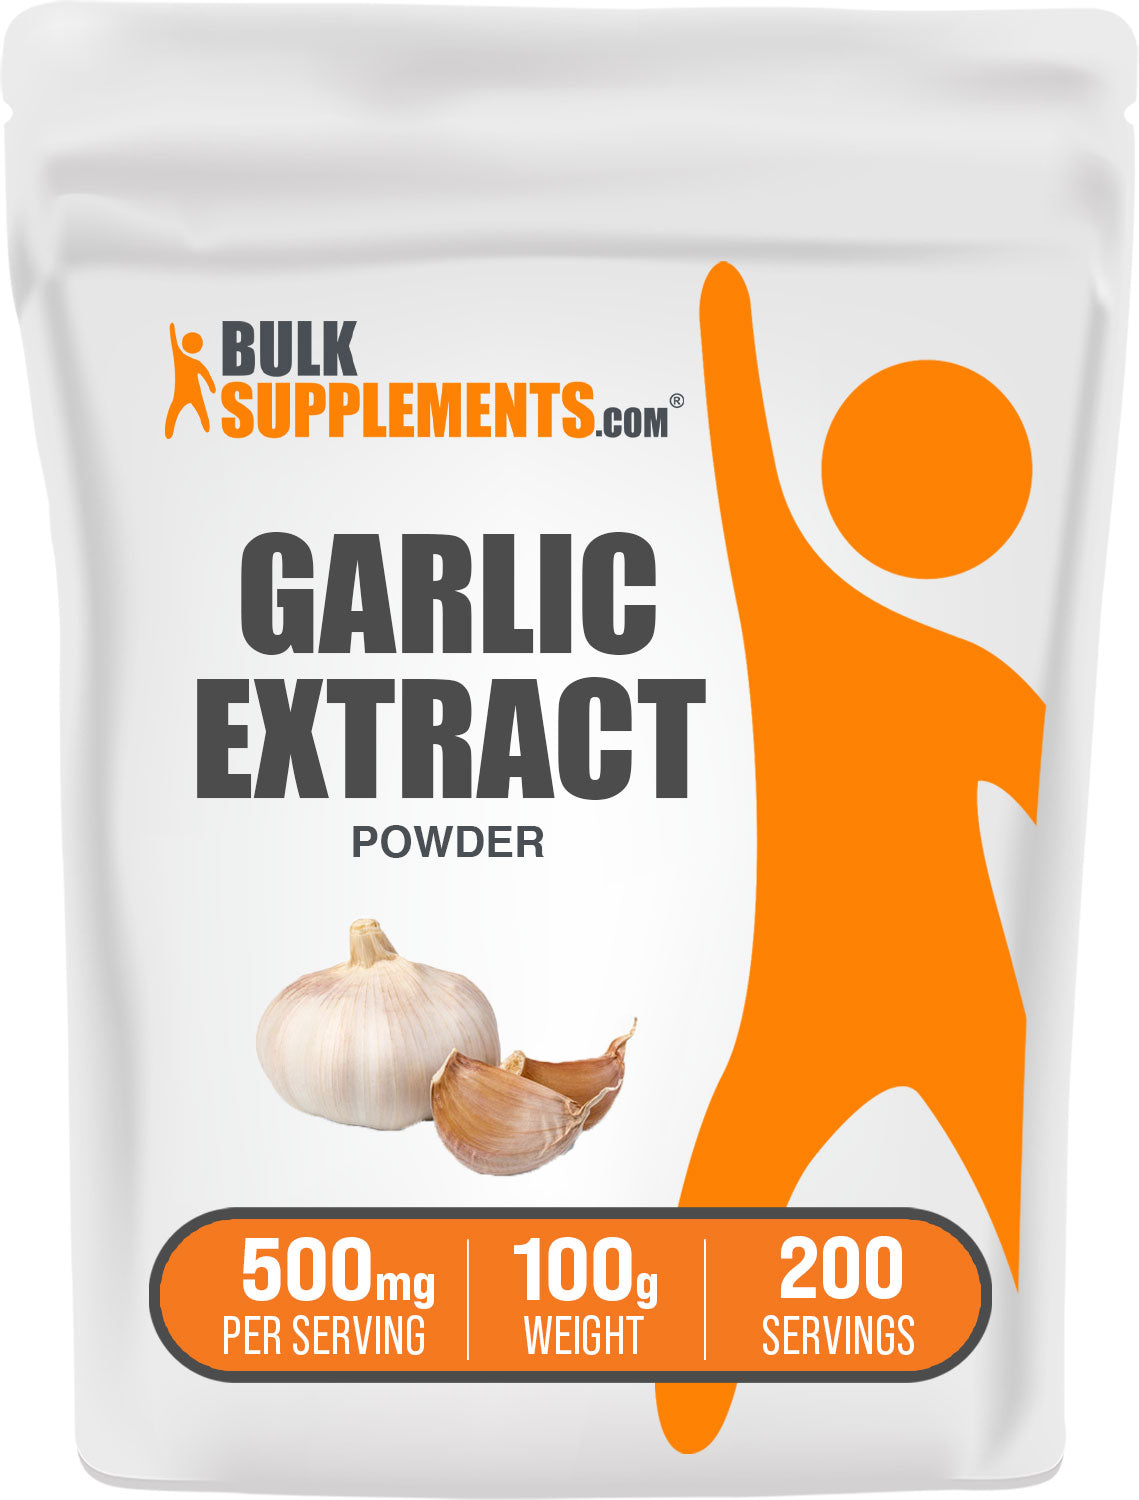 Garlic Extract 100g bag